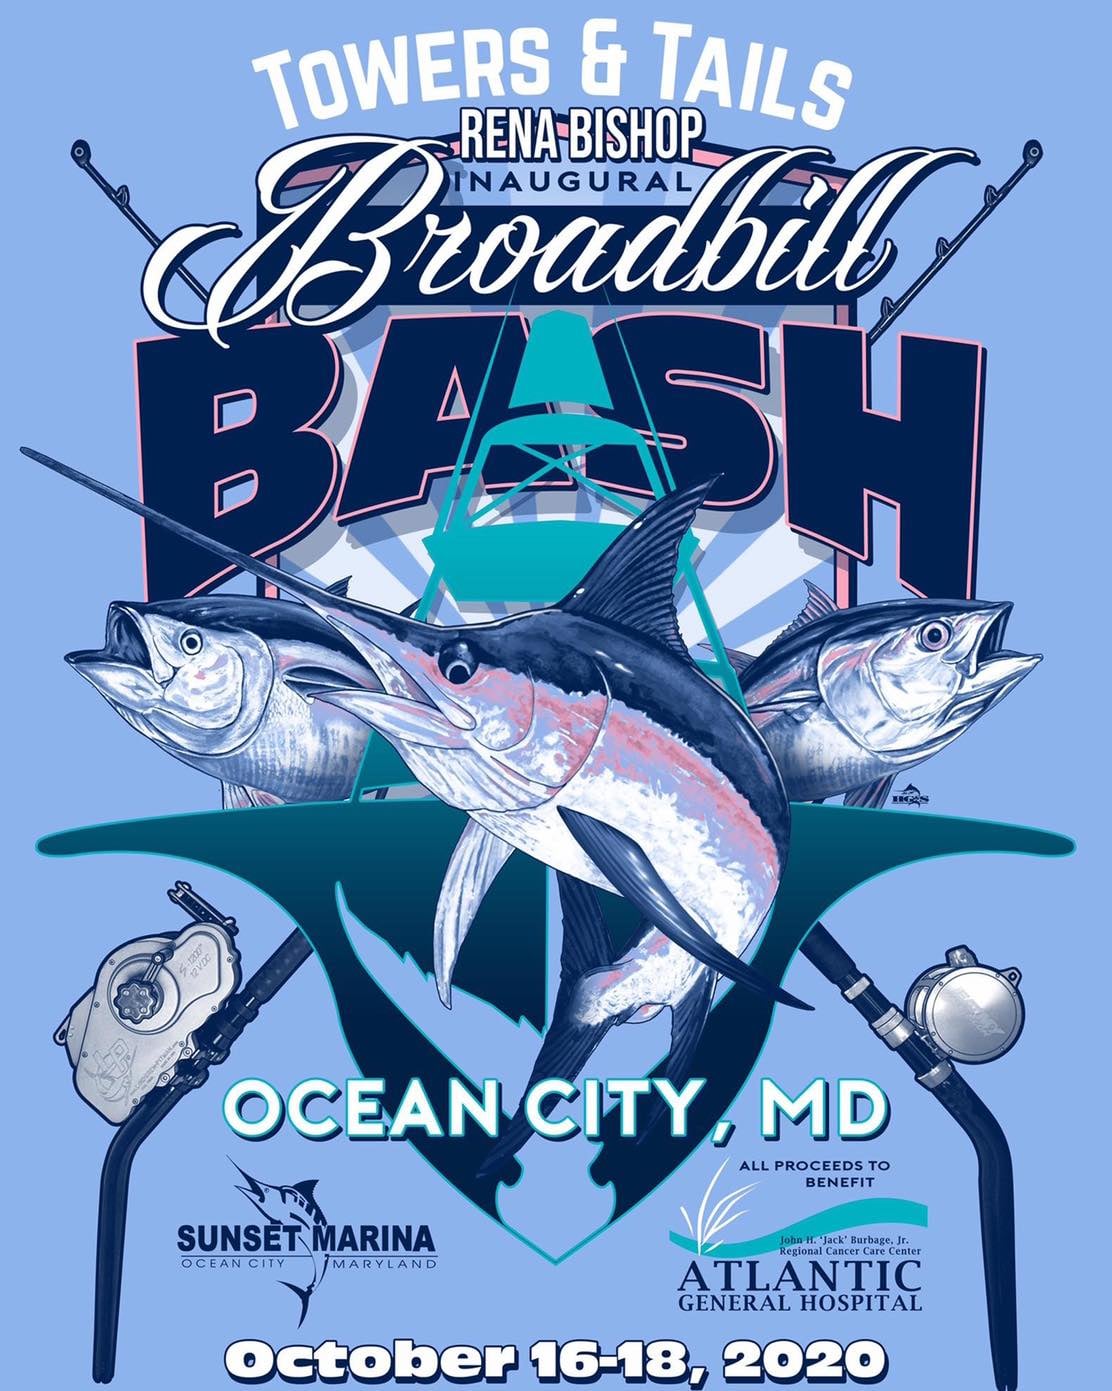 NEW Bishop Broadbill Bash Tournament